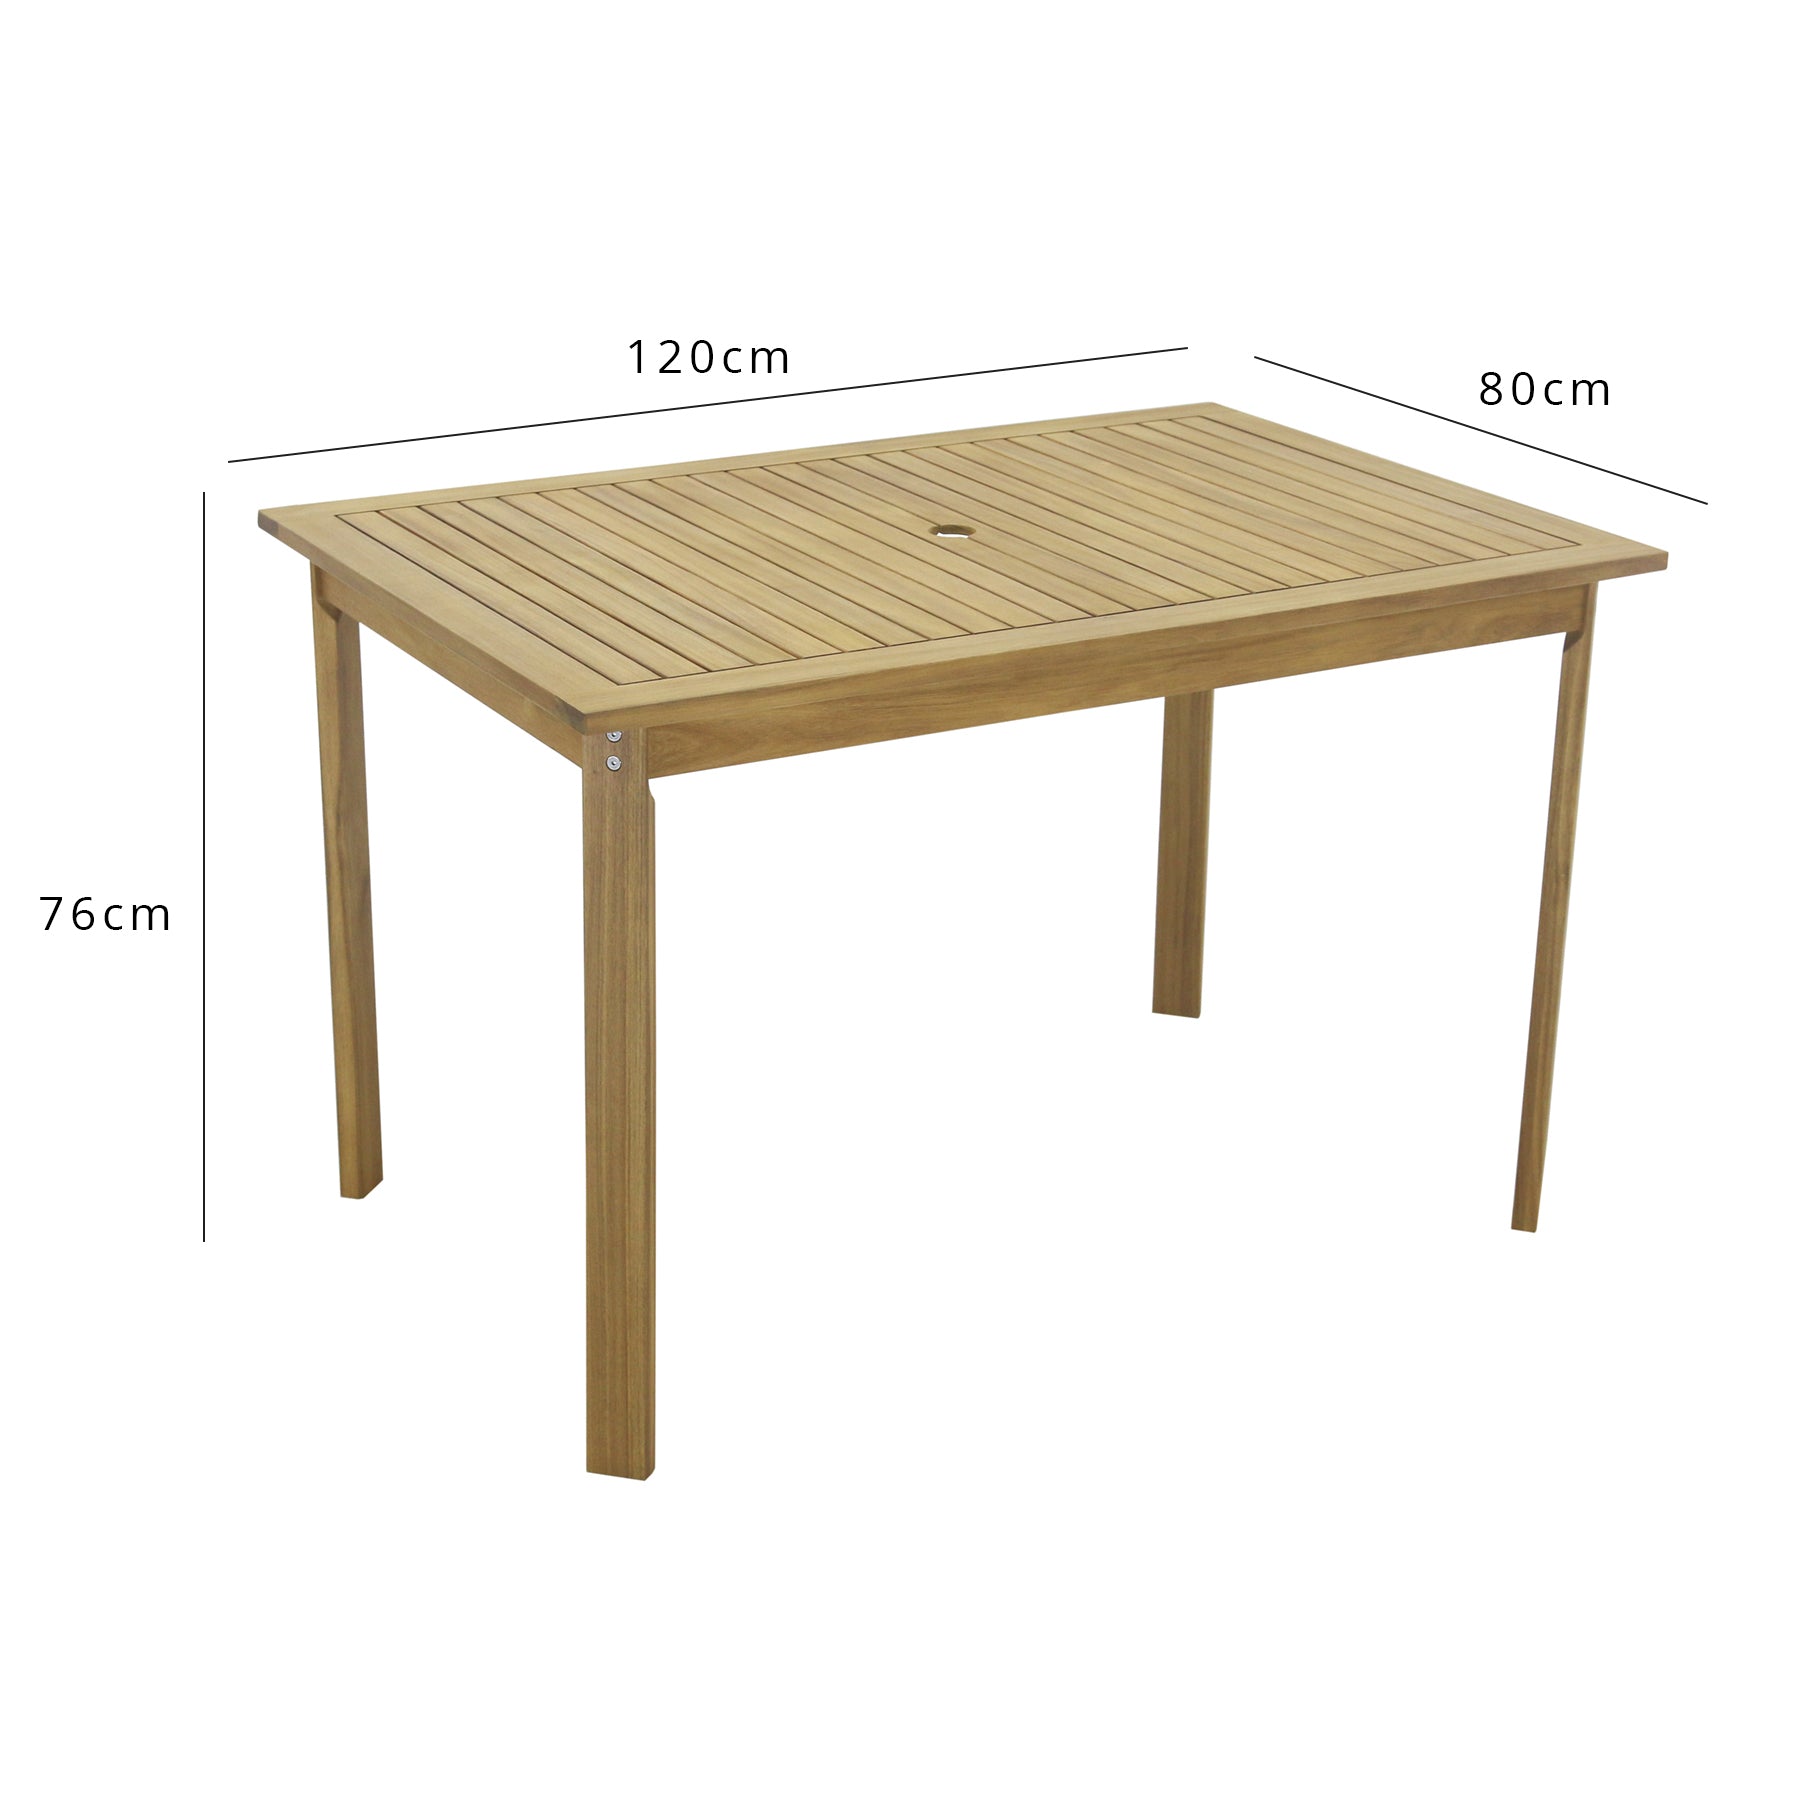 Ackley wooden garden furniture – 6 seater outdoor dining set - Laura James